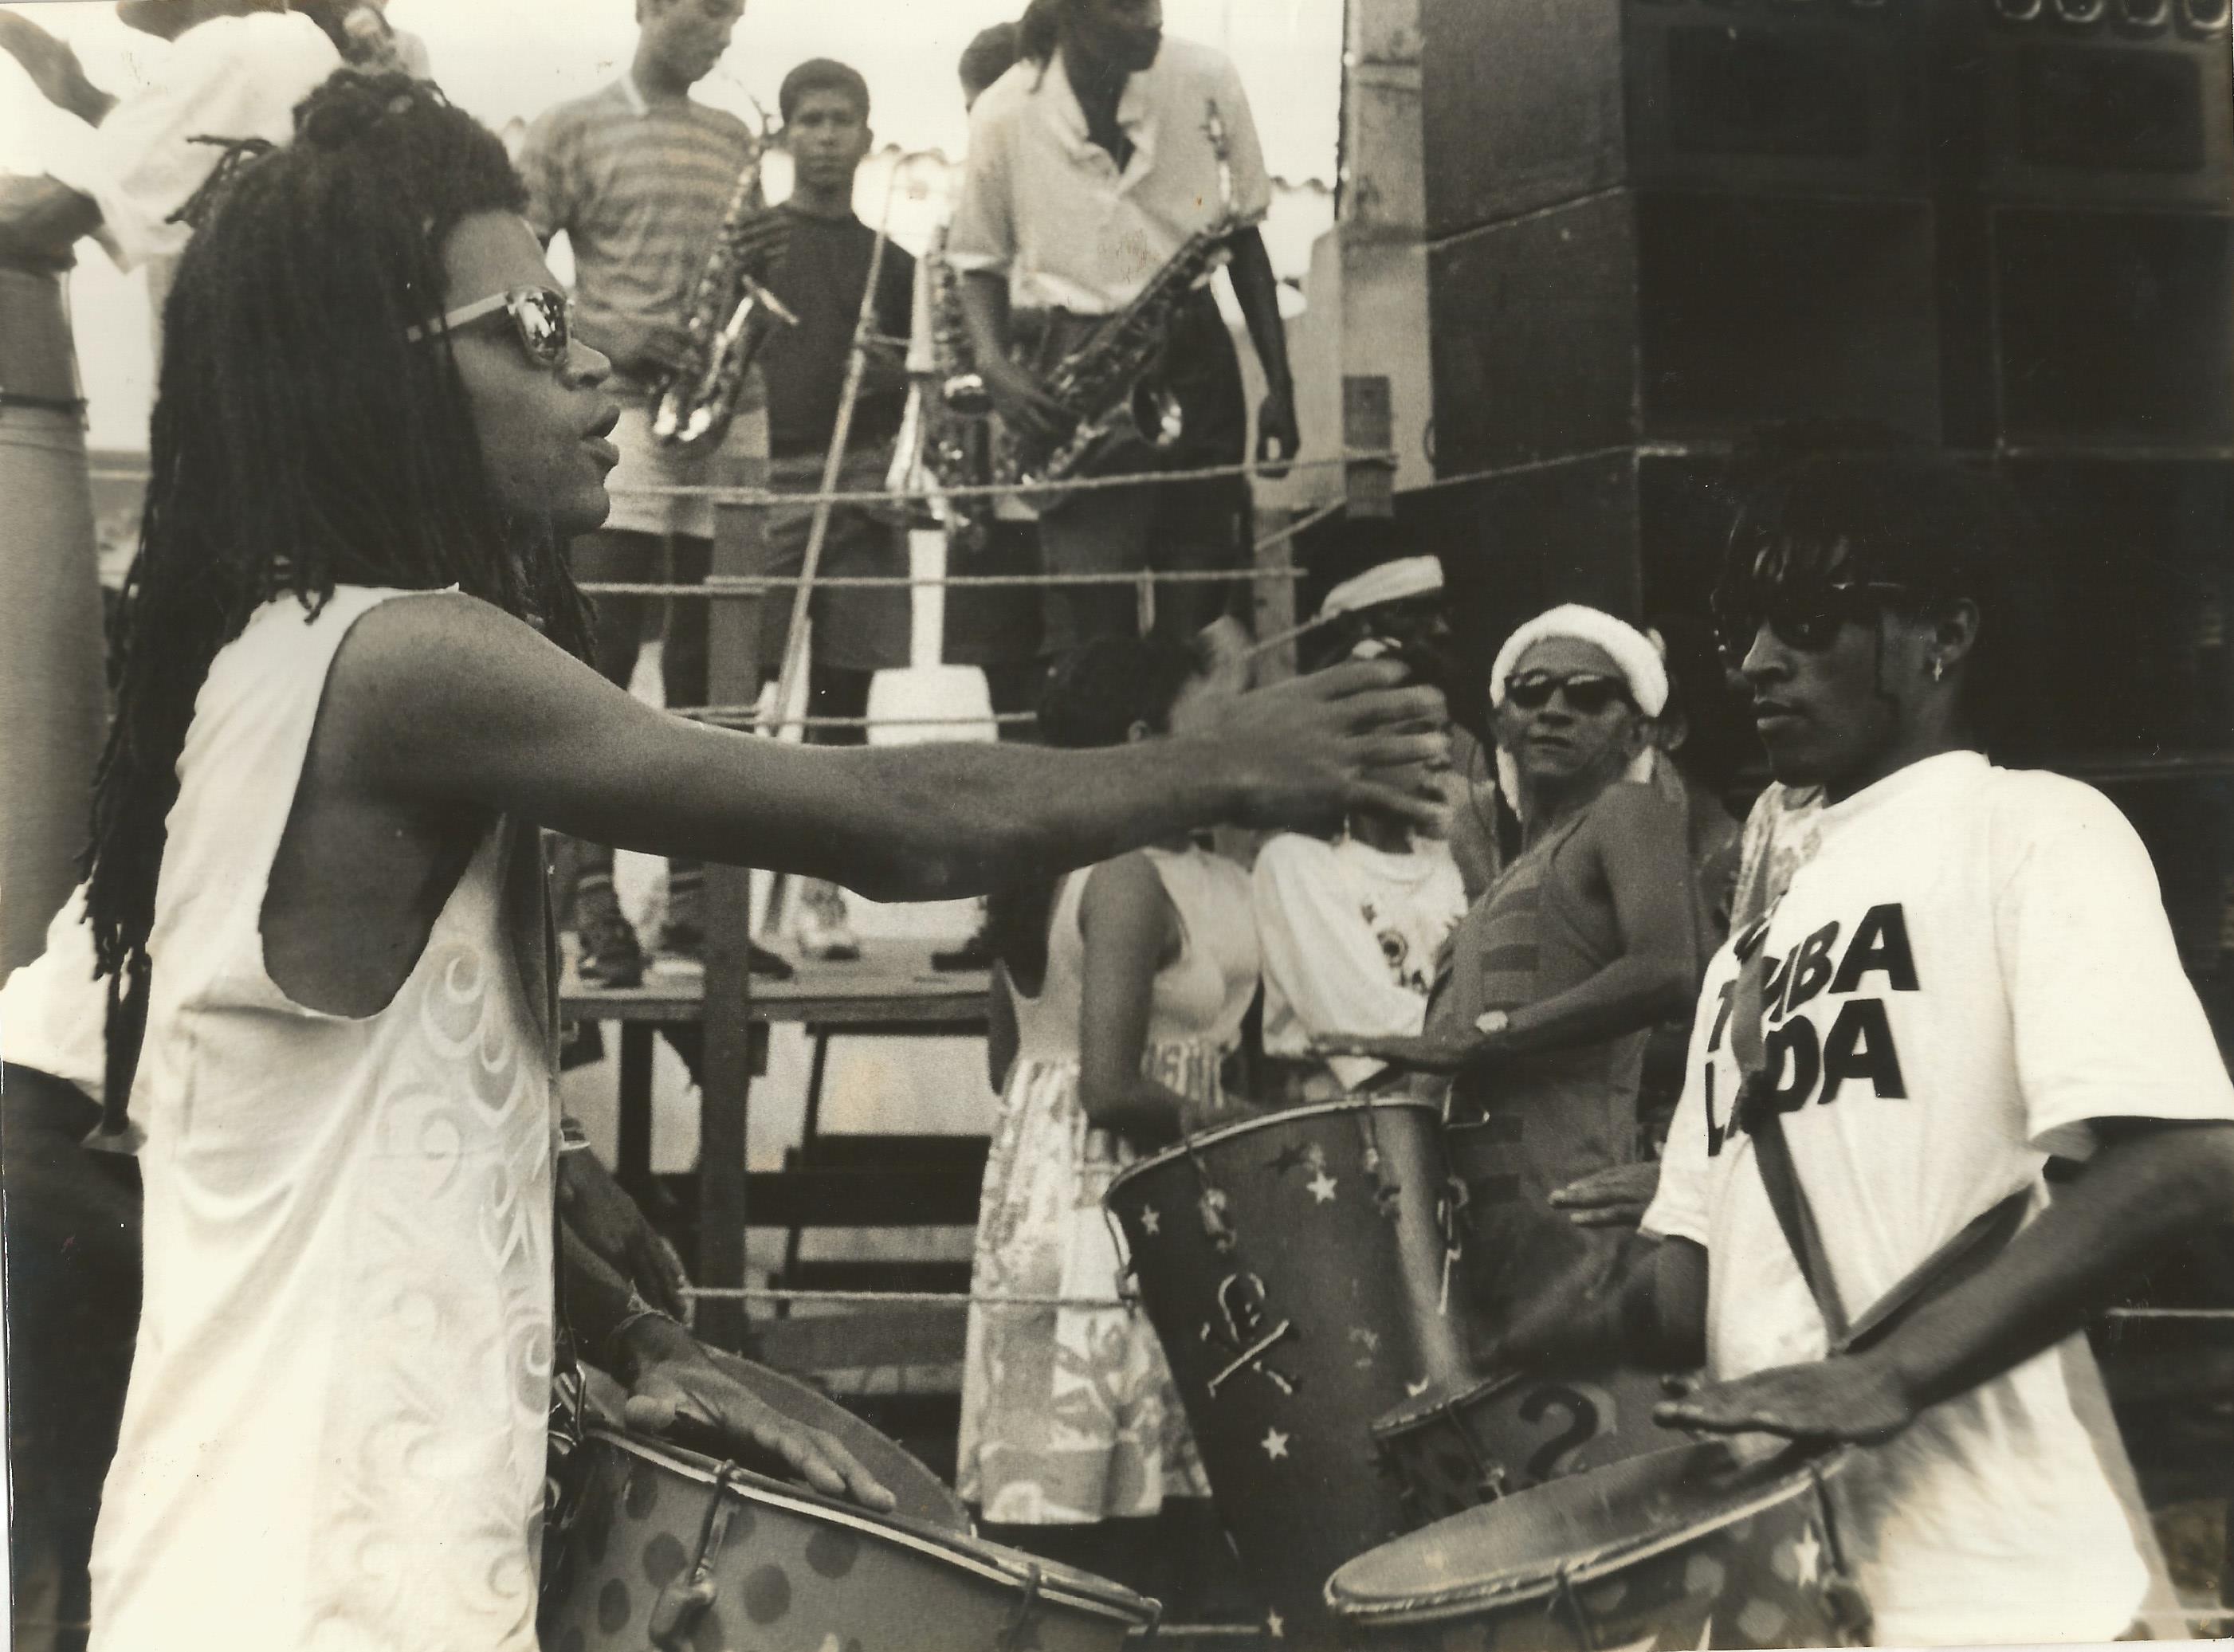 1991 – Fundaçao da Timbalada – Carlinhos Brown – Ensaio da Timbalada – Candeal